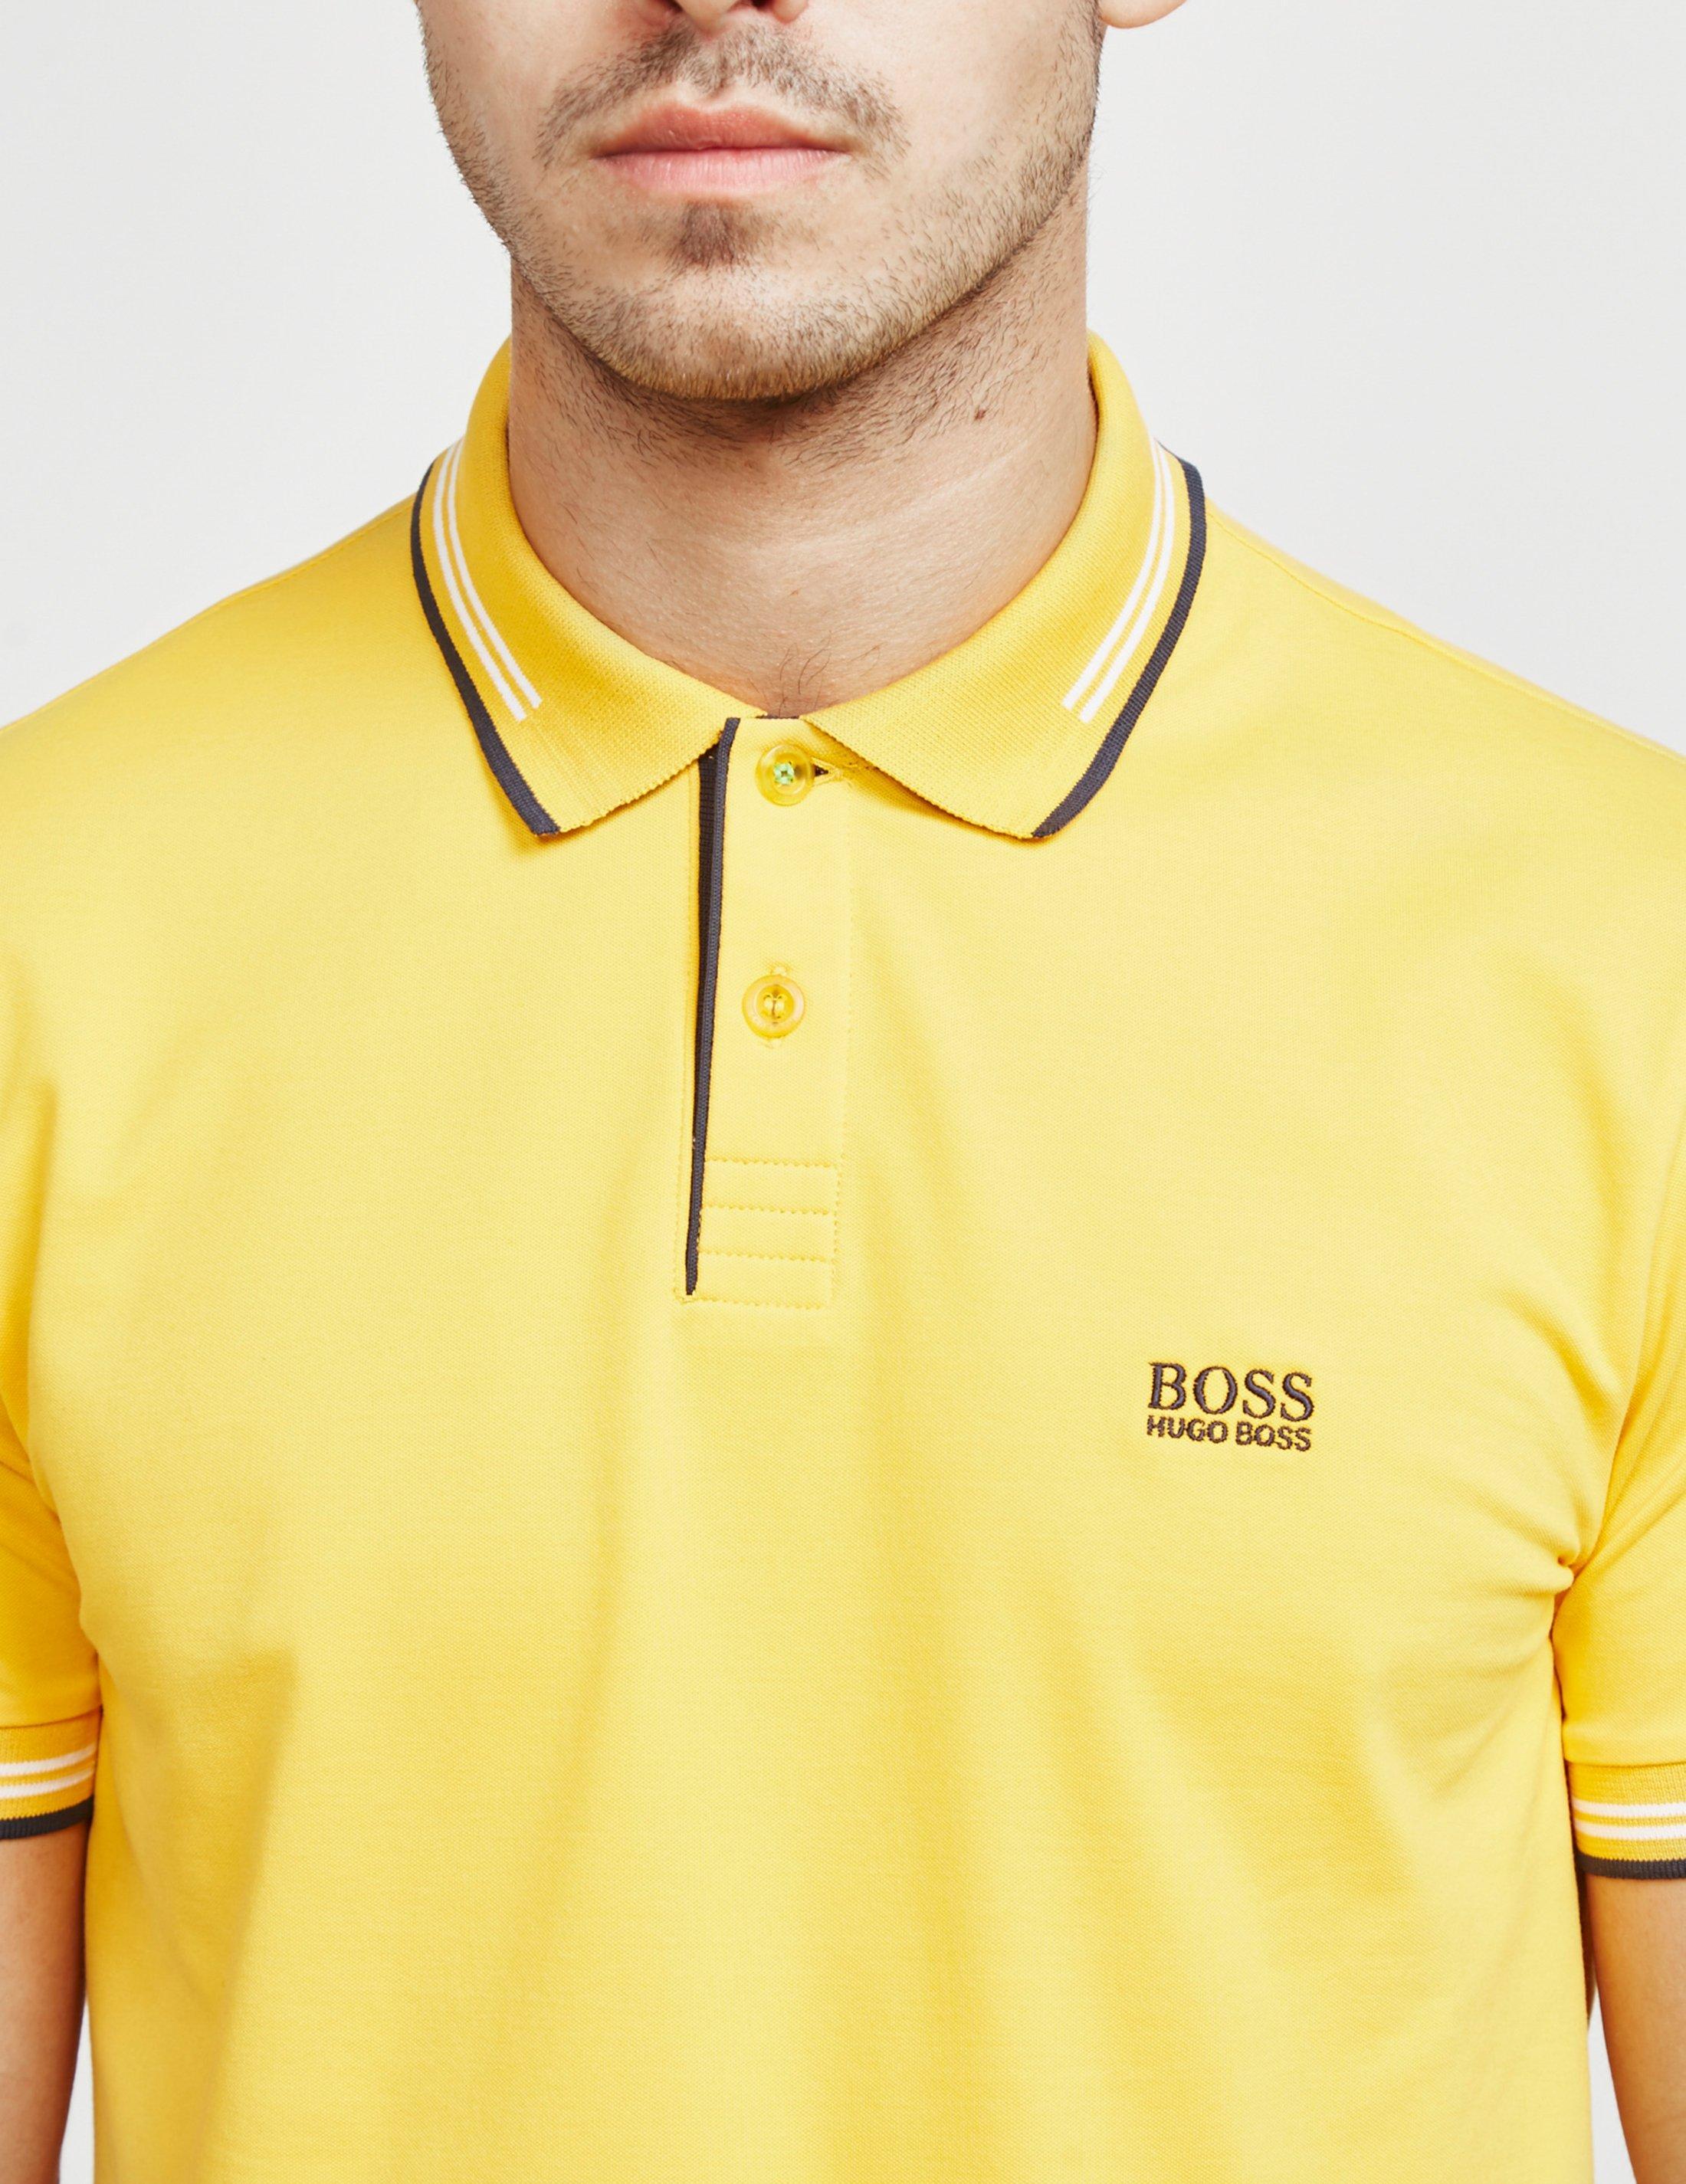 BOSS by HUGO BOSS Cotton Paul Short Sleeve Polo Shirt Yellow for Men | Lyst